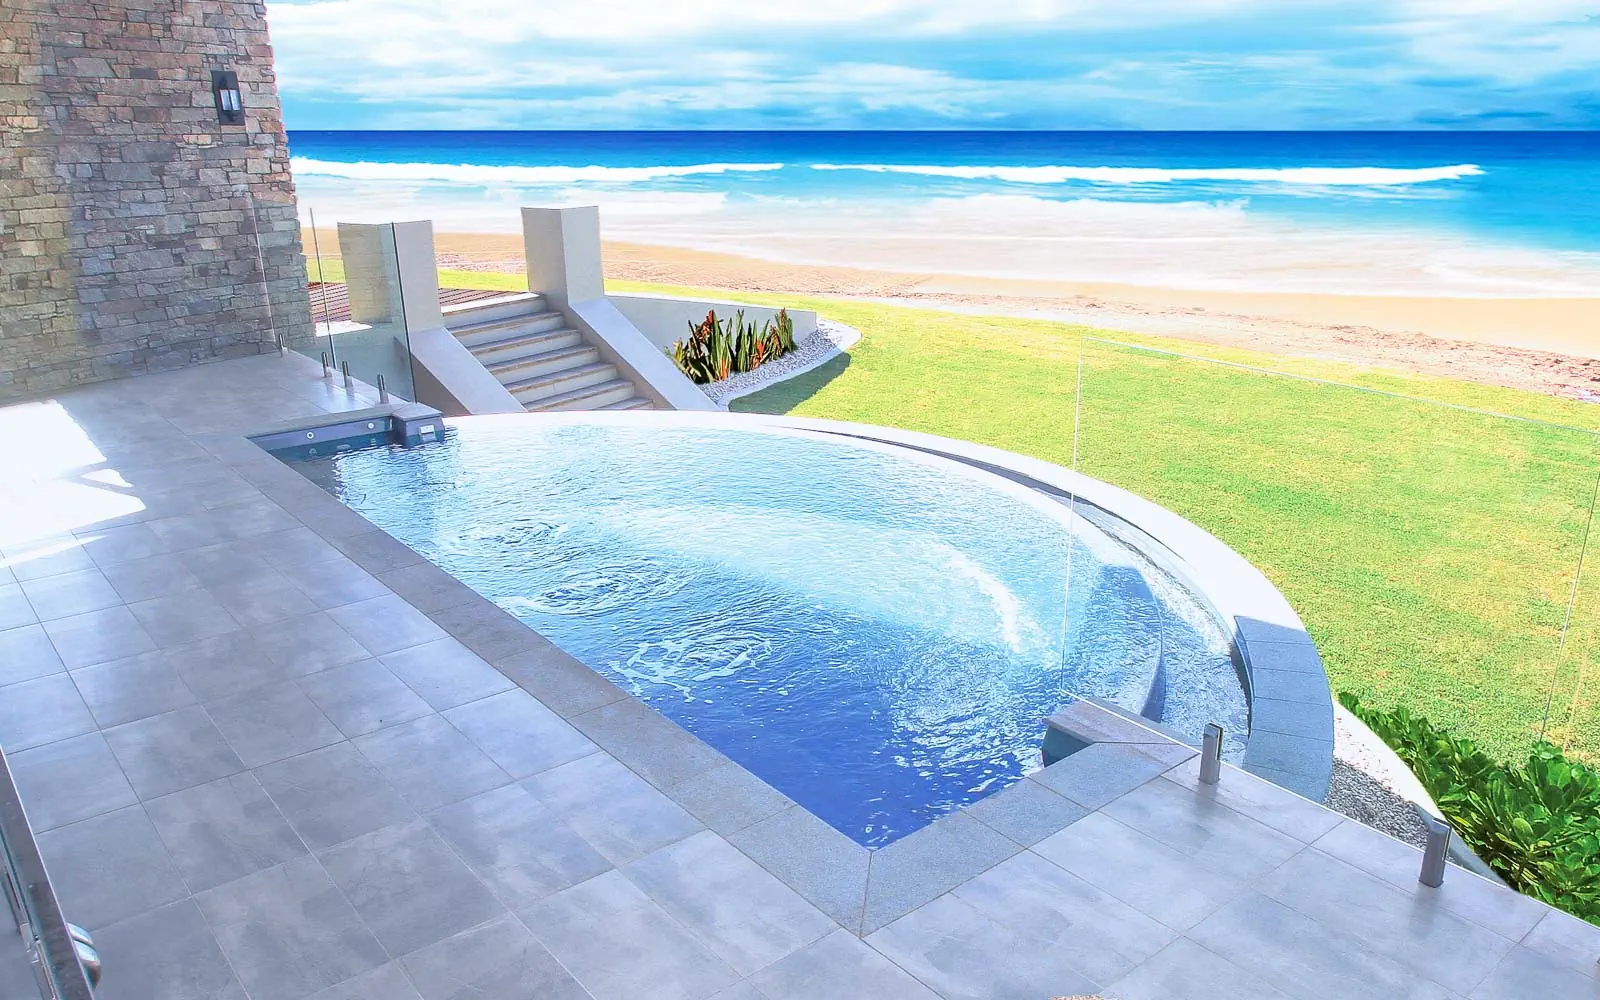 Leisure Pools Horizon swimming pool with built-in vanishing edge